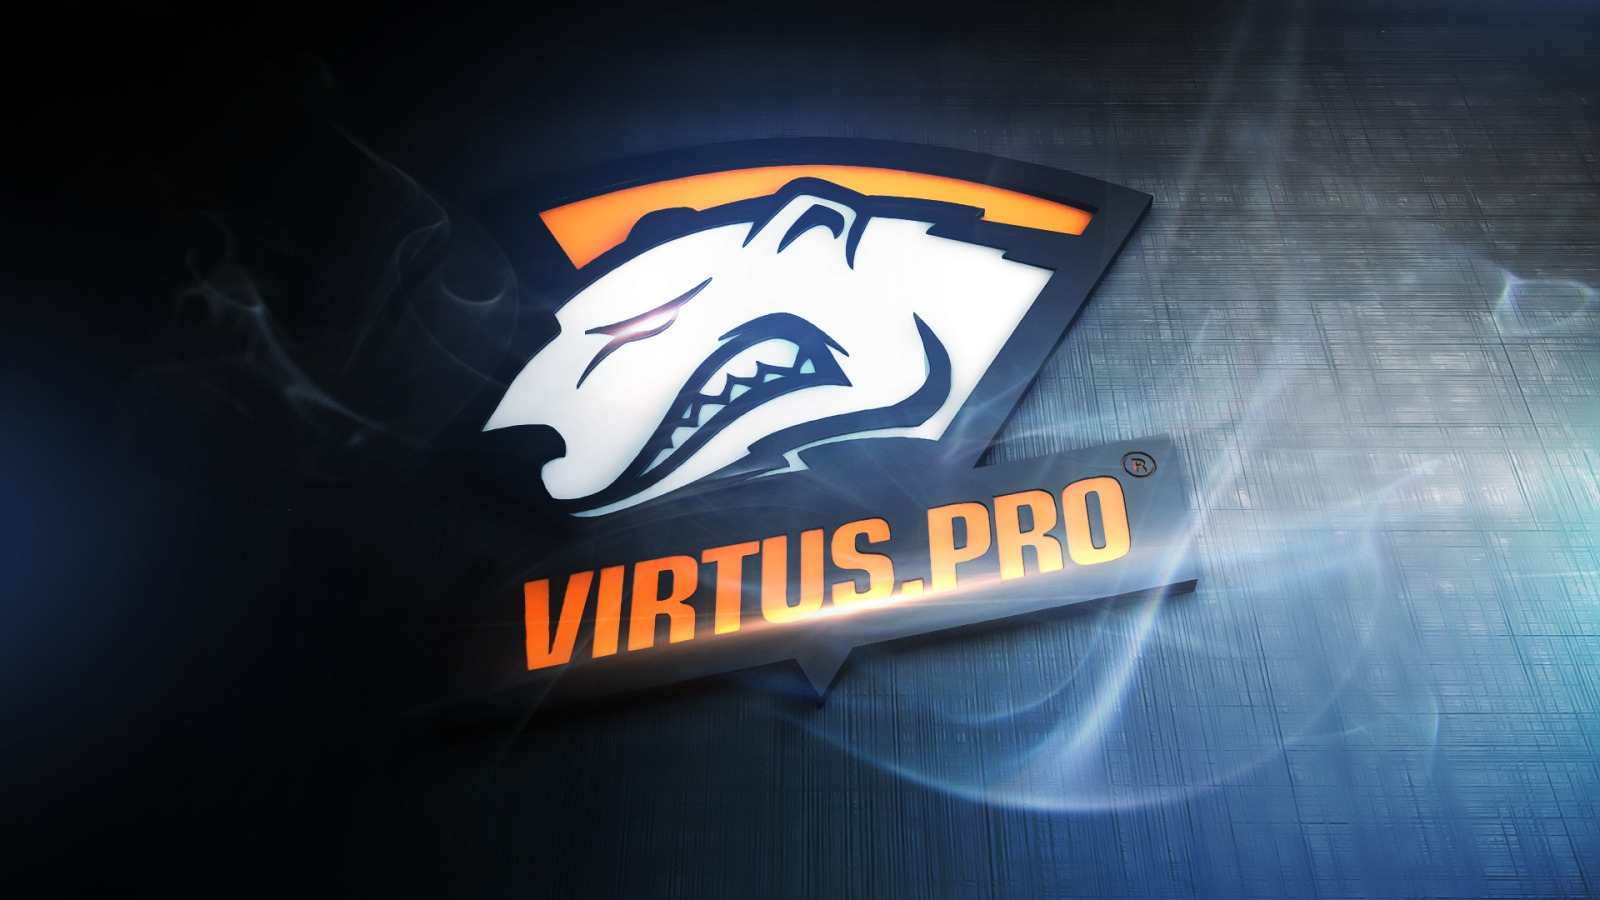 Виртус про стандофф 2. Virtus Pro логотип. Virtus Pro 2003. Virtus Pro Dota 2 лого. Virtus Pro обои.